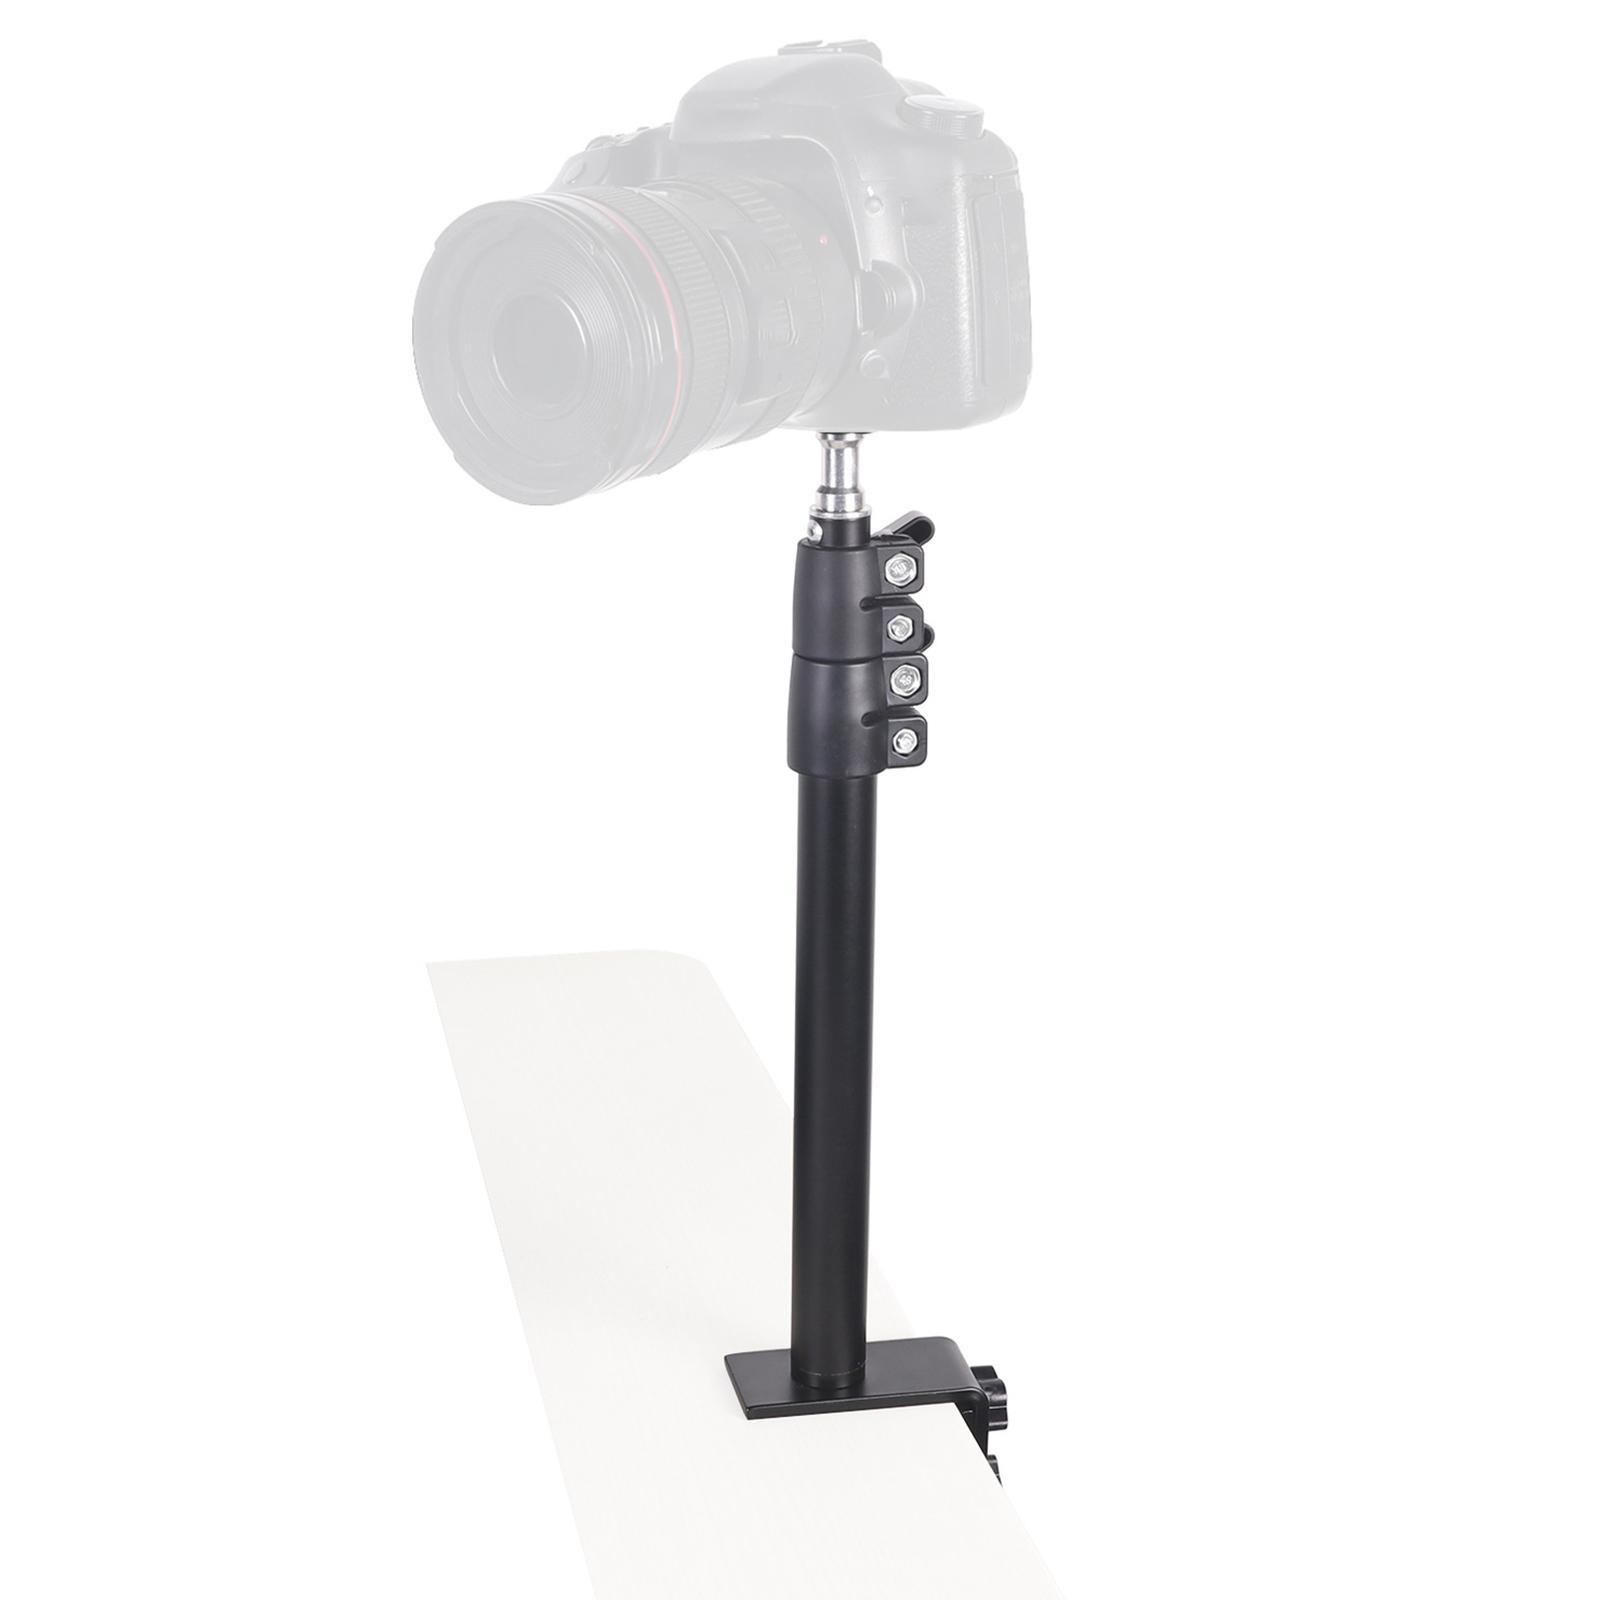 46-74cm Camera Desk Mount Tabletop Bracket Stand Aluminum for camera